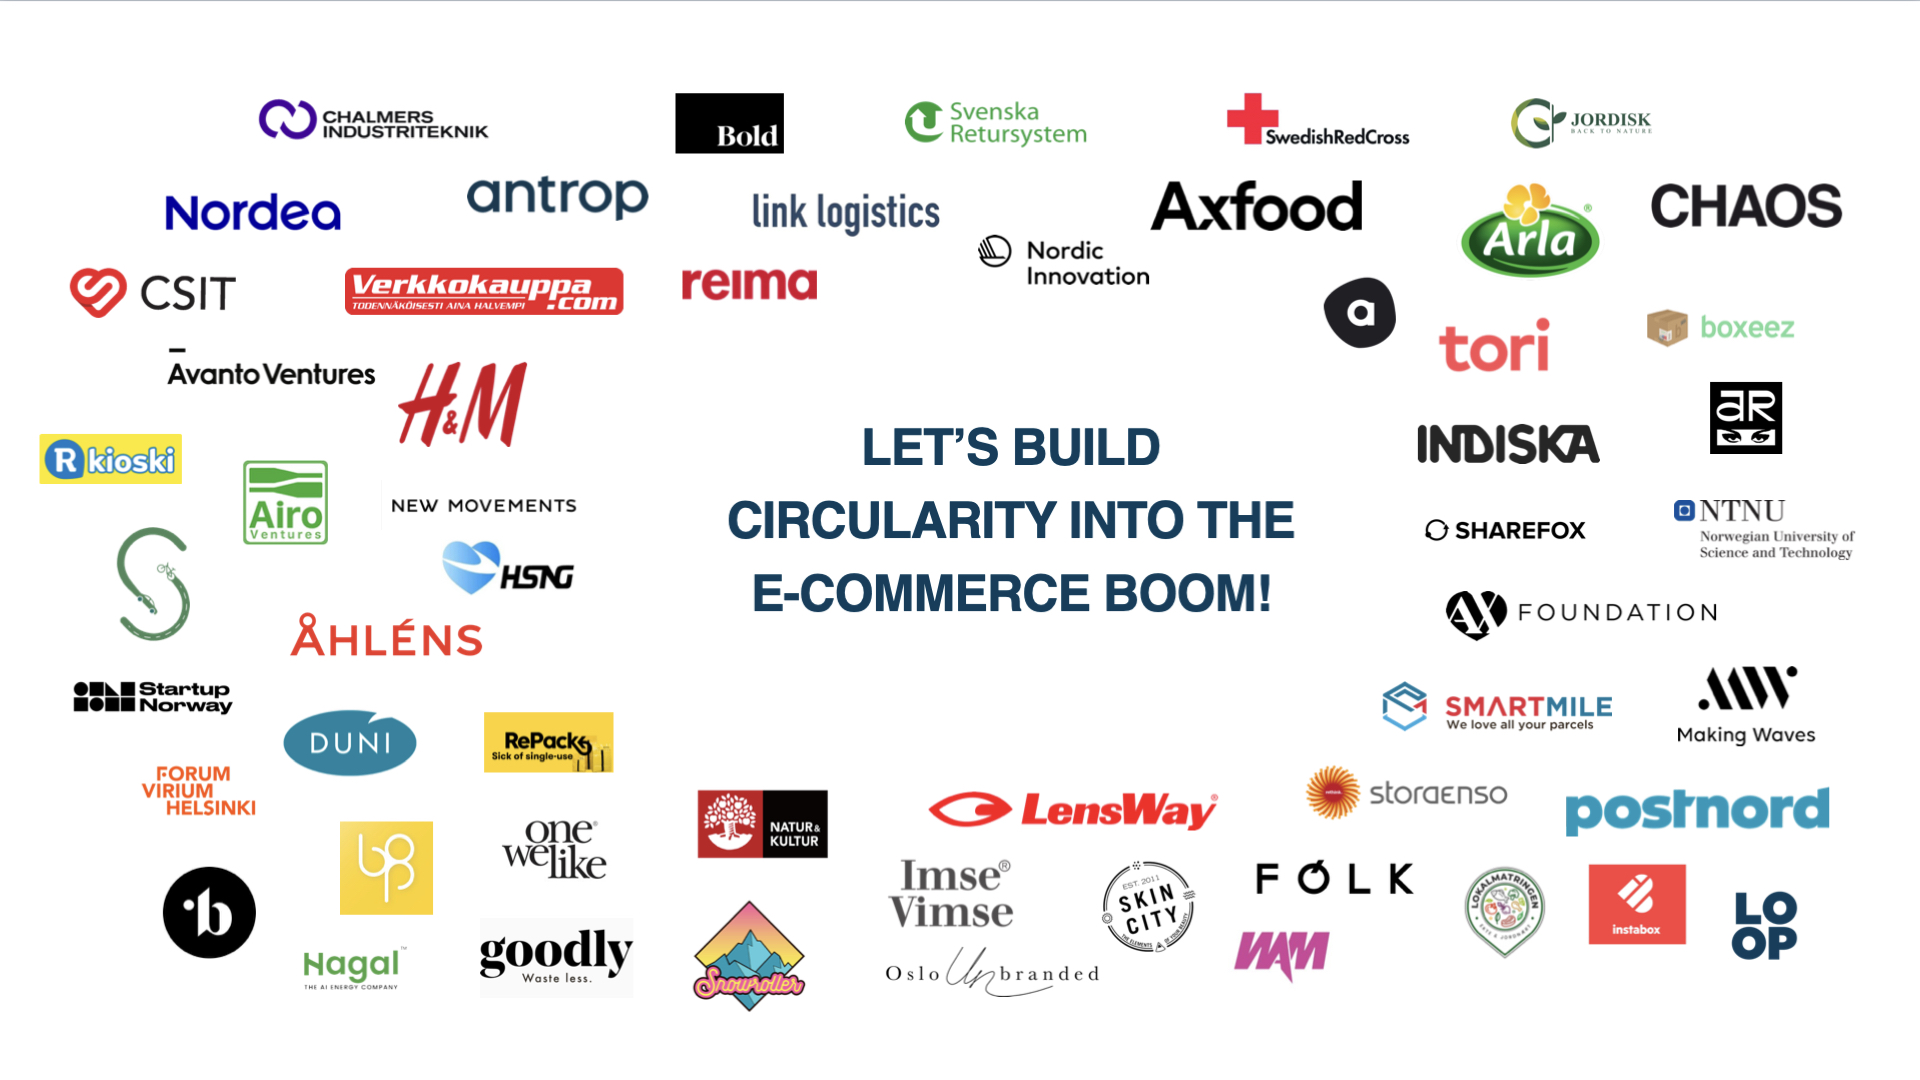 Loggor placerade runt texten "Let's build circularity into the e-commerce boom!